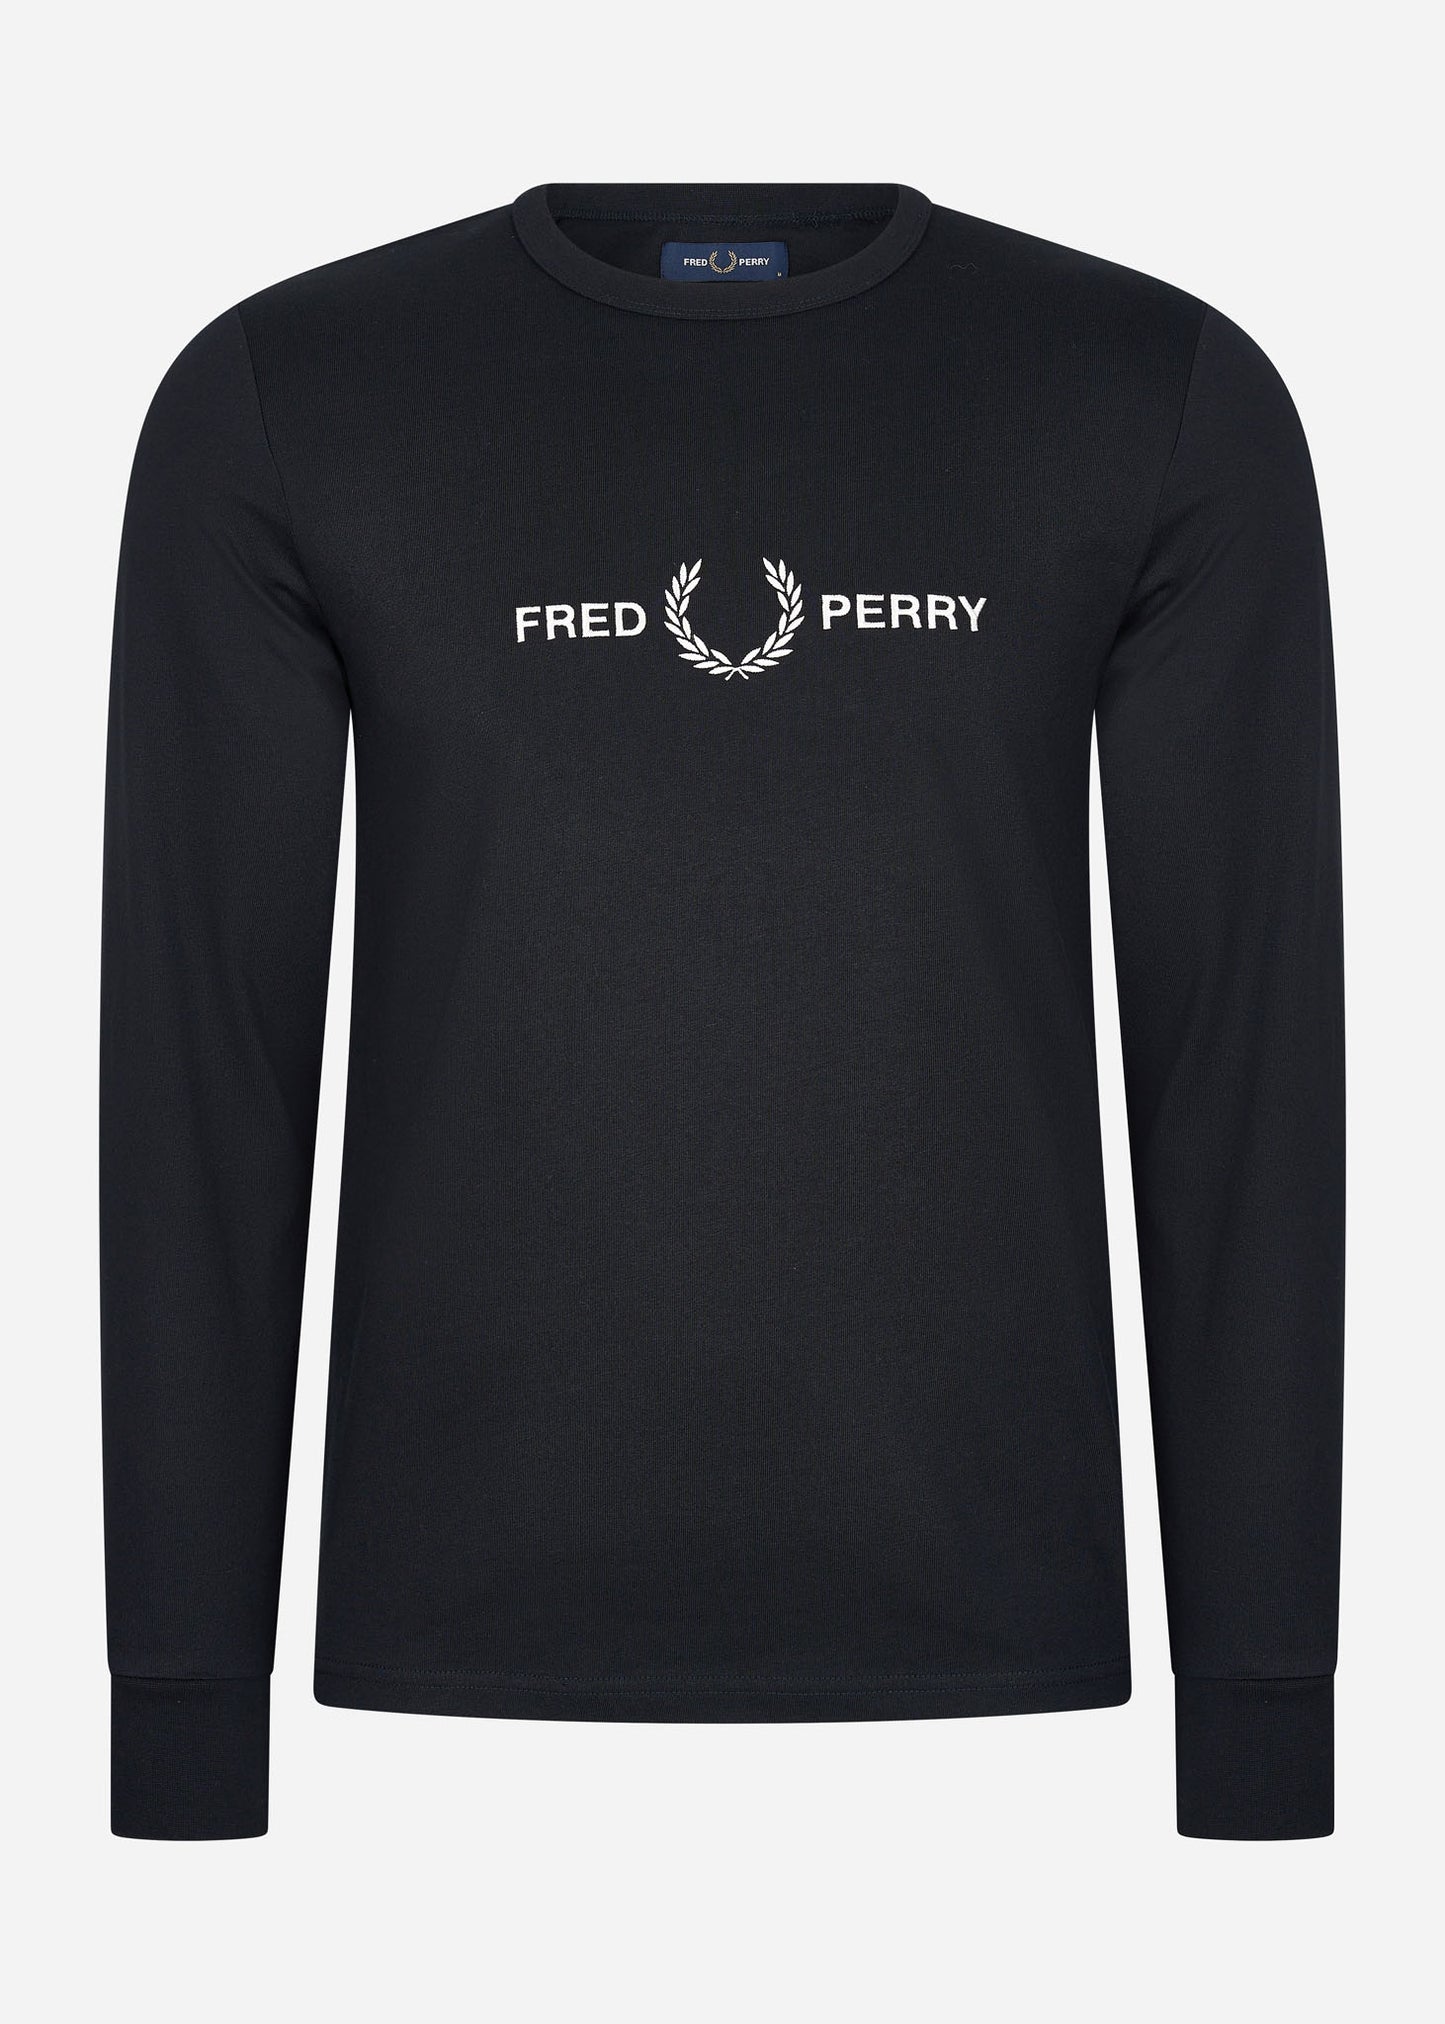 Fred Perry longsleeve black zwart